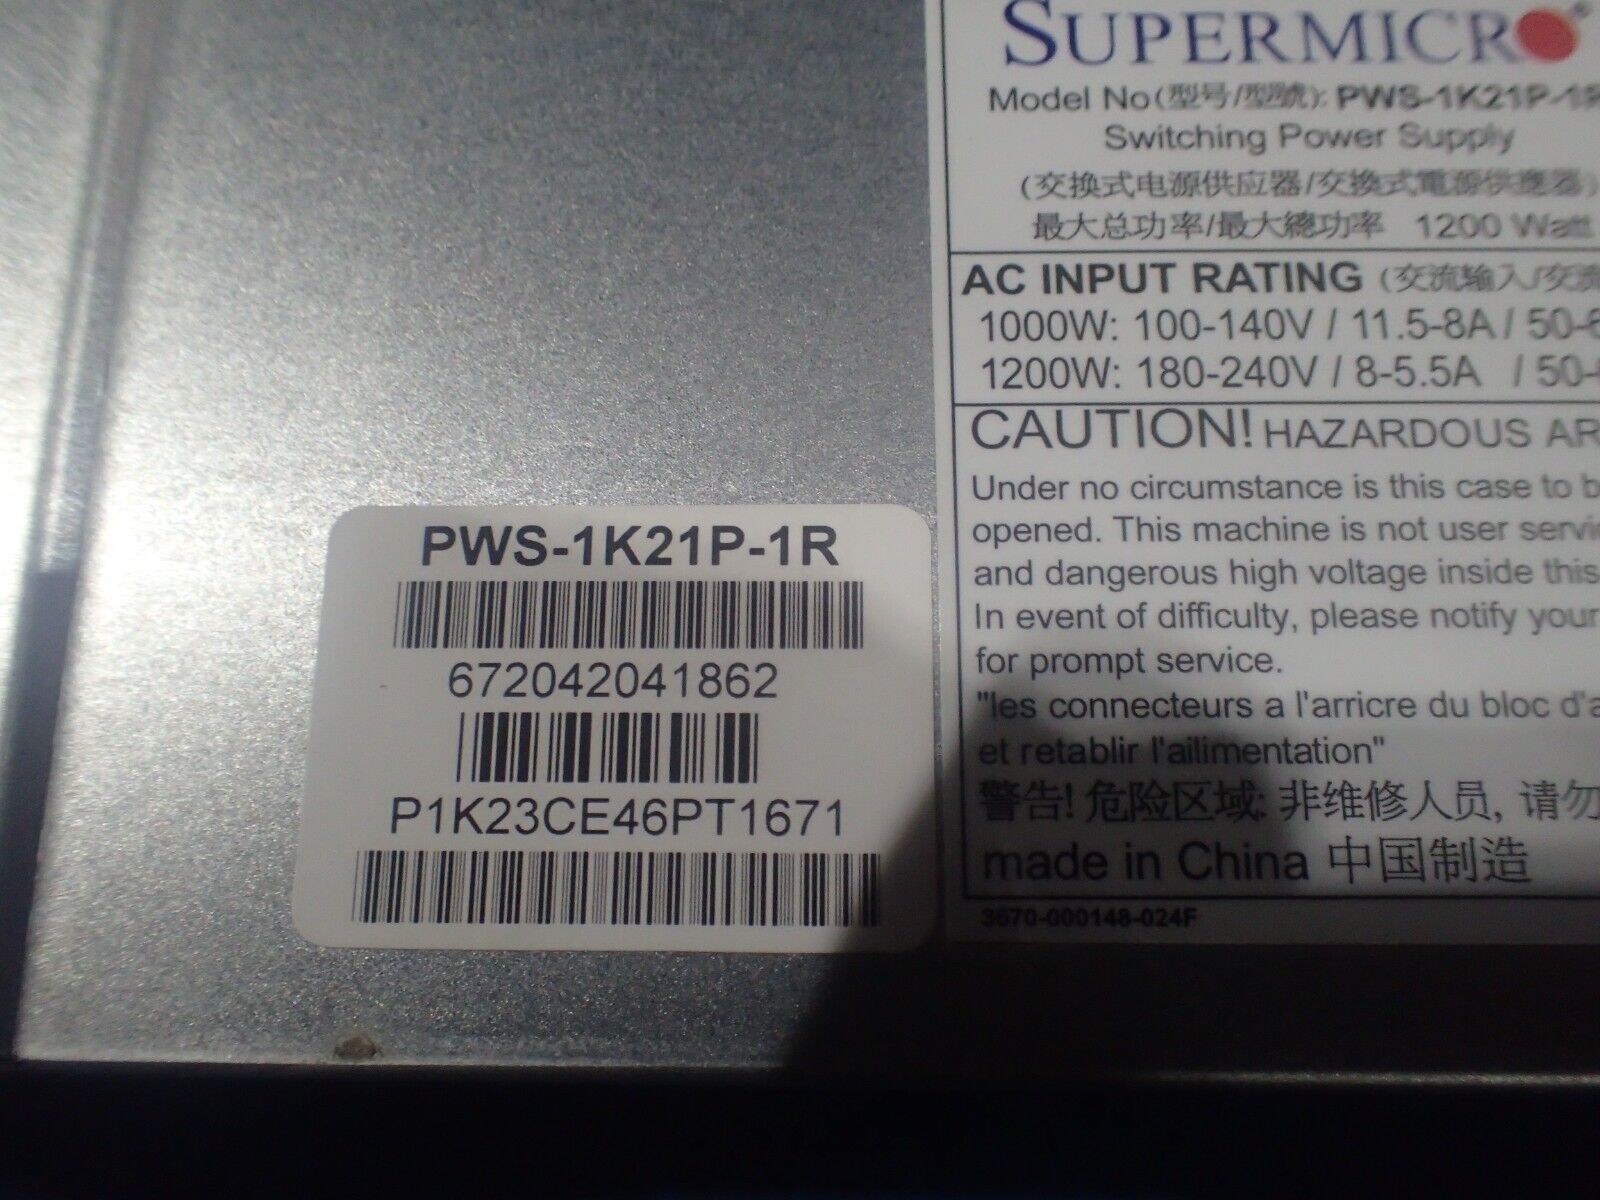 SuperMicro PWS-1K21P-1R 1200W Power Supply